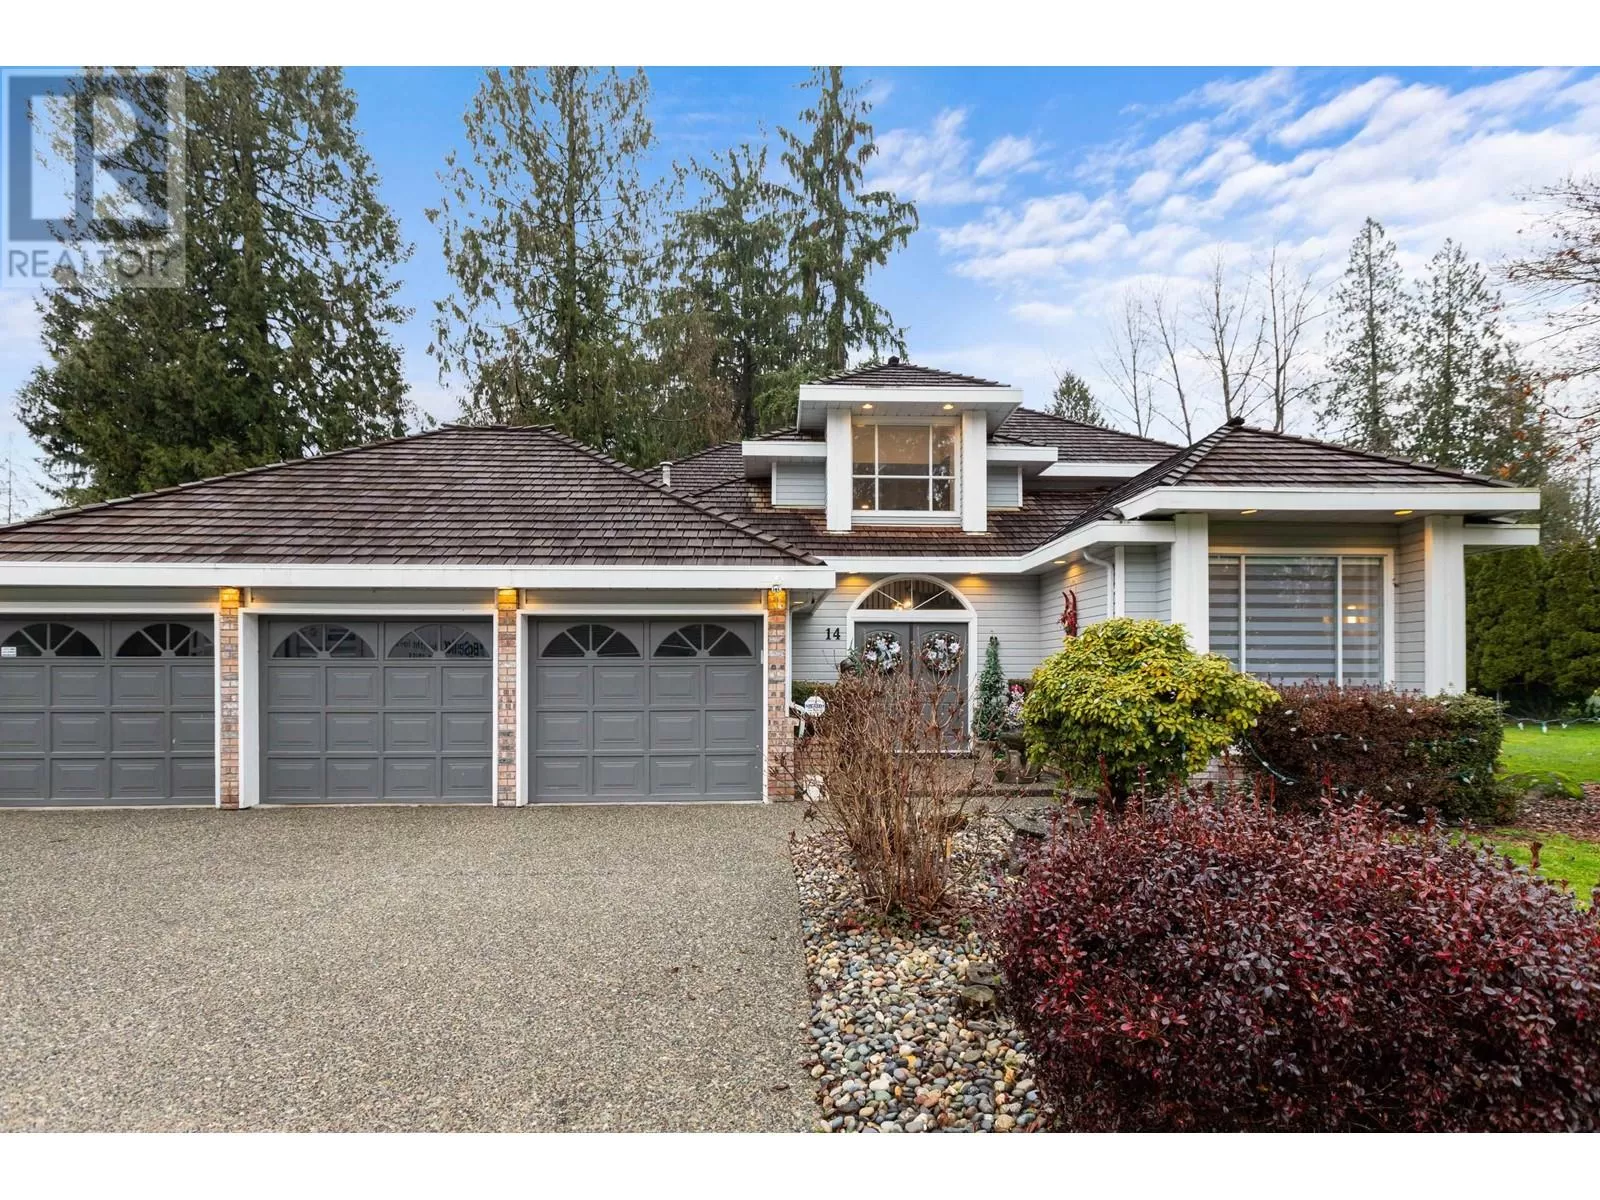 House for rent: 14 23100 129 Avenue, Maple Ridge, British Columbia V2X 0M5